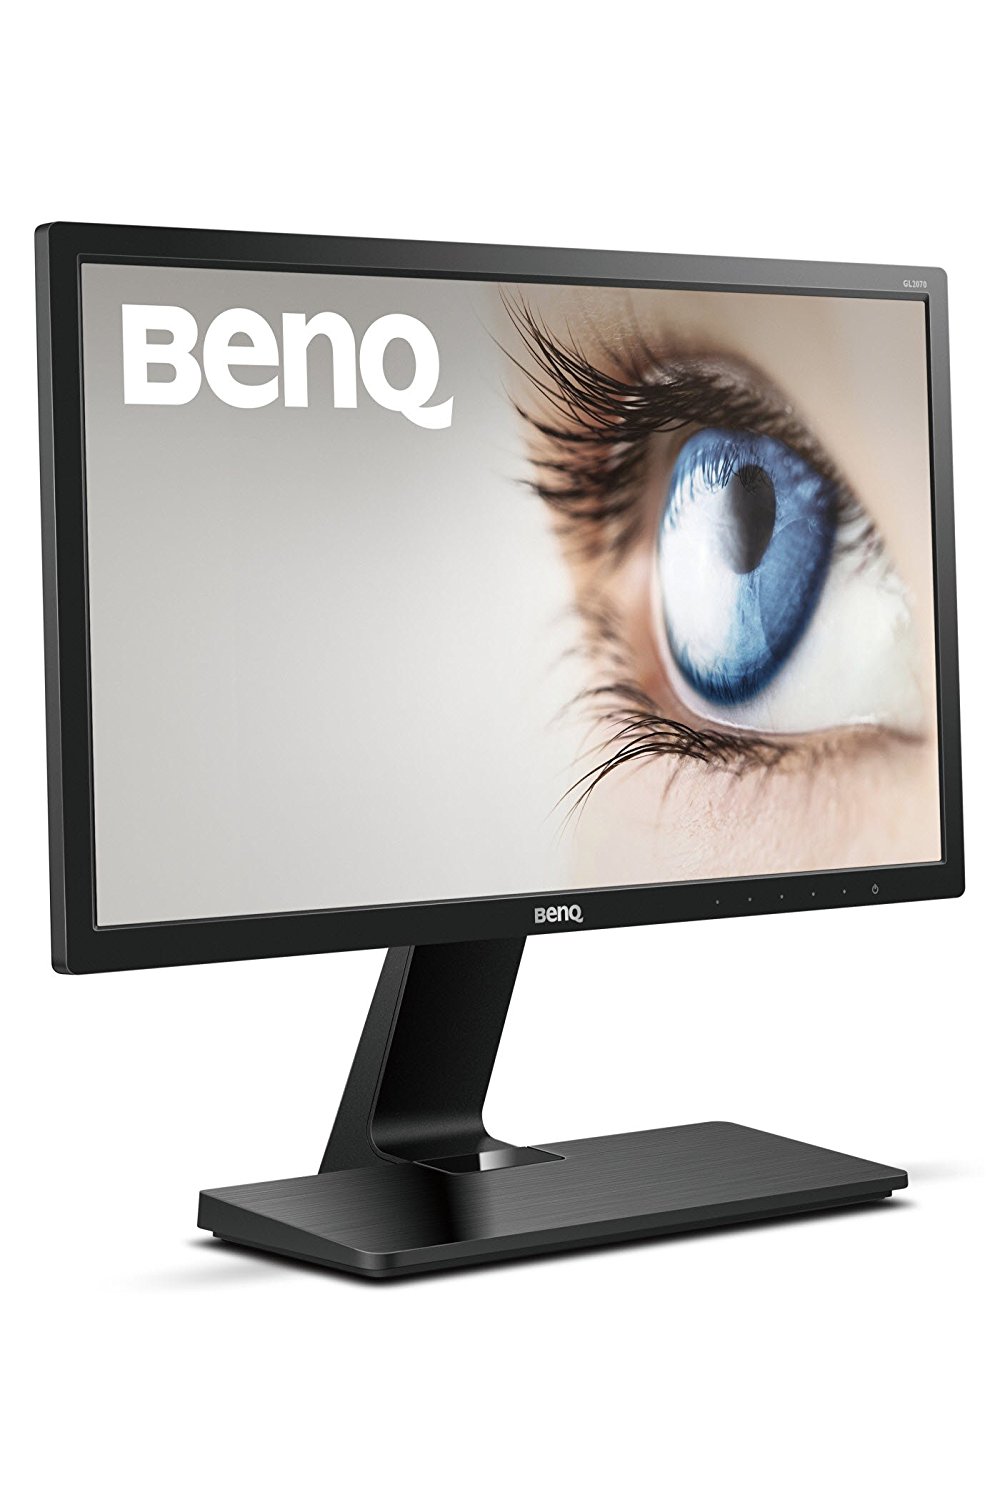 BenQ GL2070 19.5-inch LED Eye-Care Monitor (1600x900, 5ms Response Time, DVI, VGA, Flicker-Free, Low Blue Light)